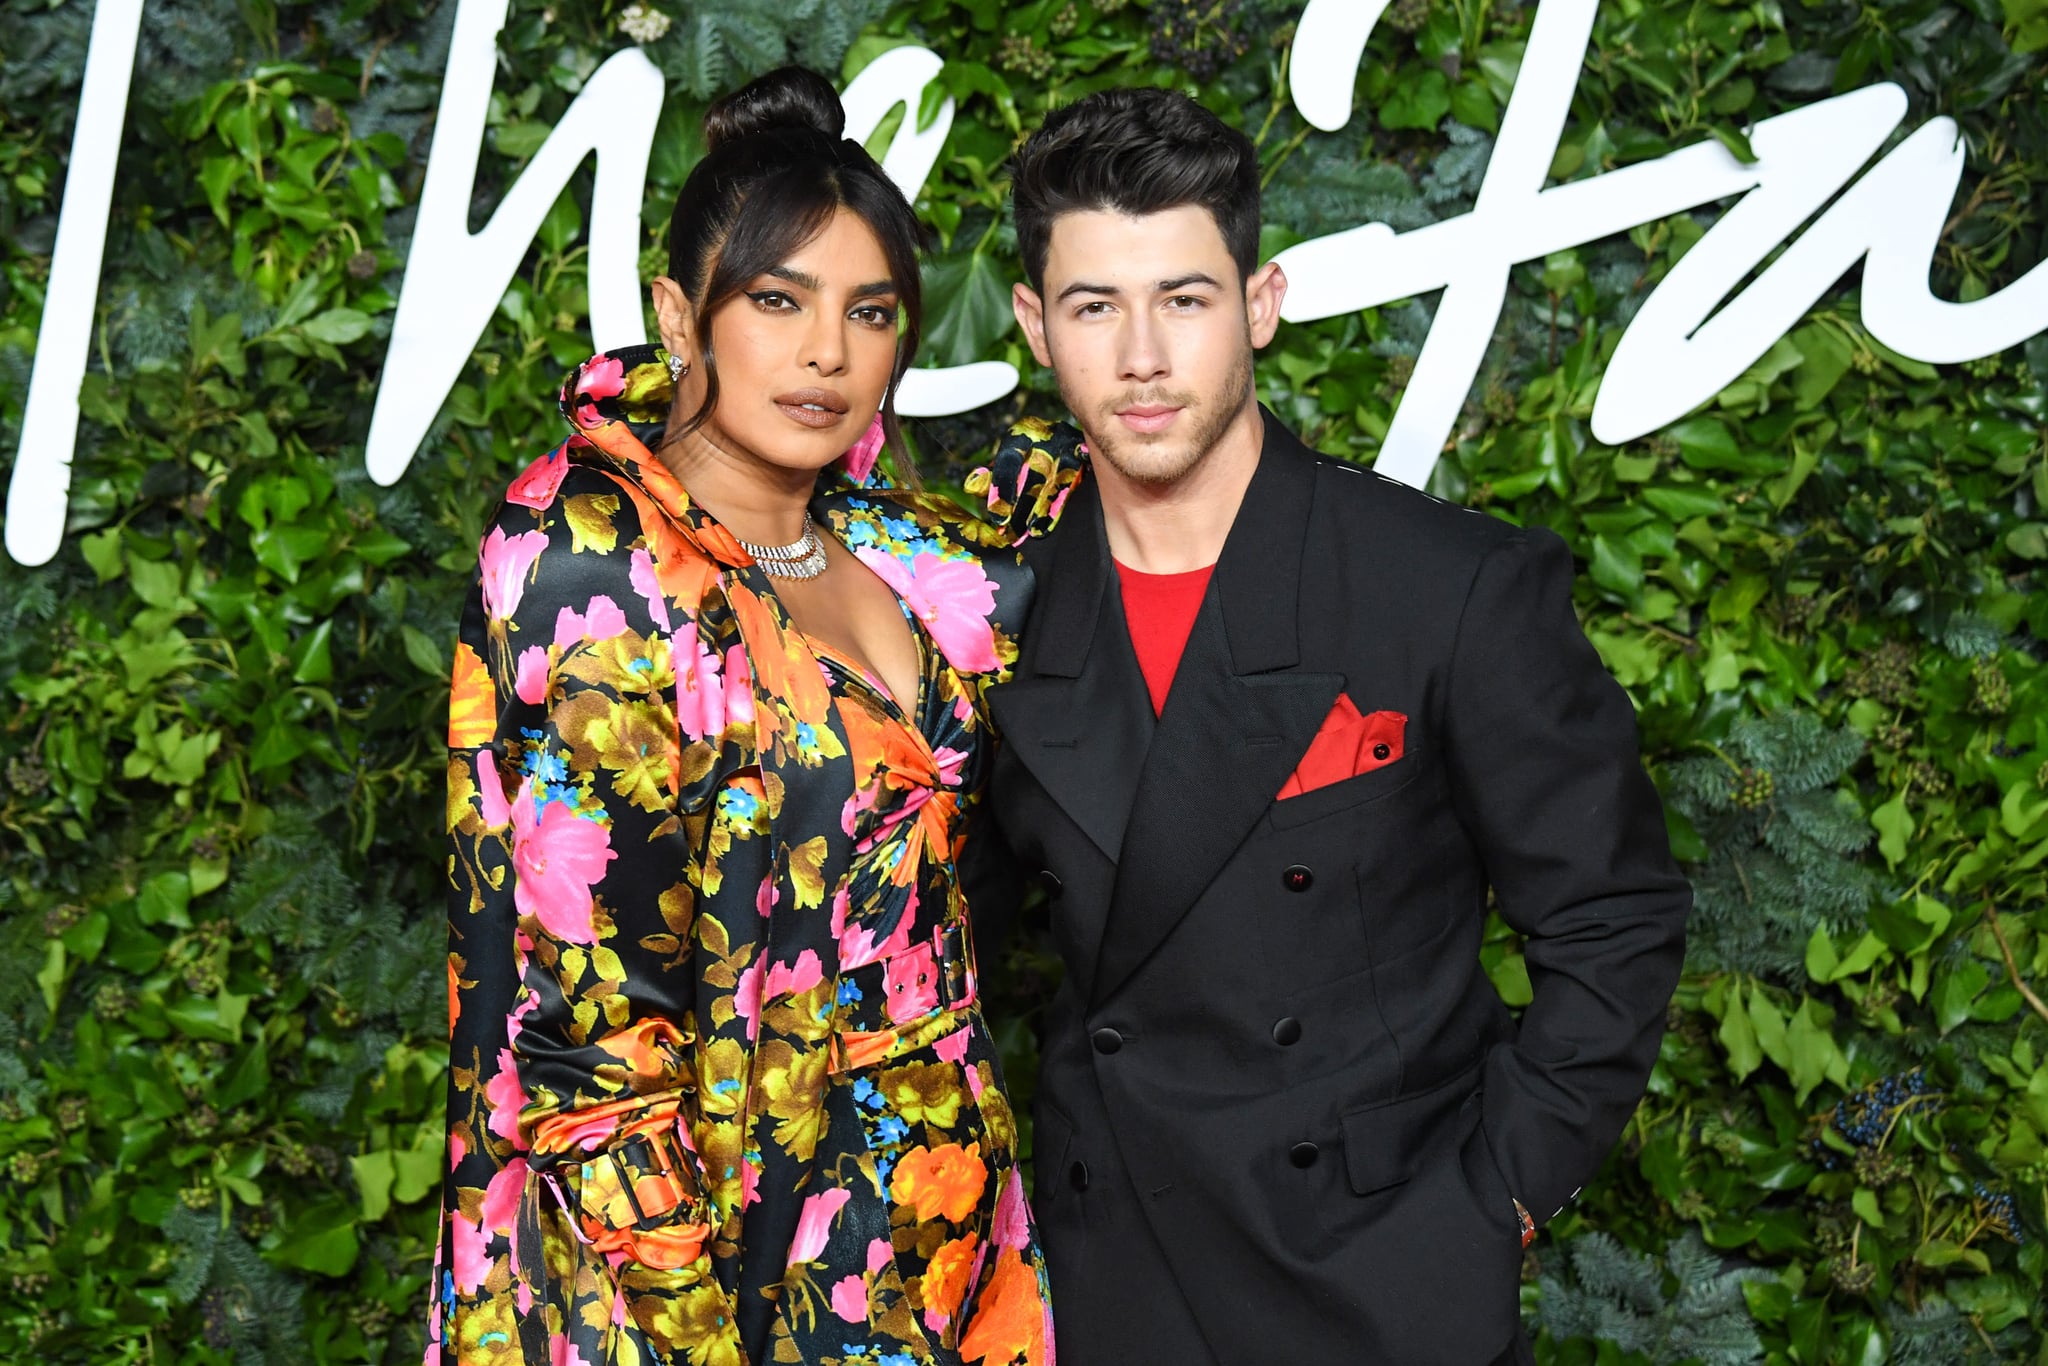 LONDON, ENGLAND - NOVEMBER 29: Priyanka Chopra and Nick Jonas  attends The Fashion Awards 2021 at the Royal Albert Hall on November 29, 2021 in London, England. (Photo by Stephane Cardinale - Corbis/Corbis via Getty Images)